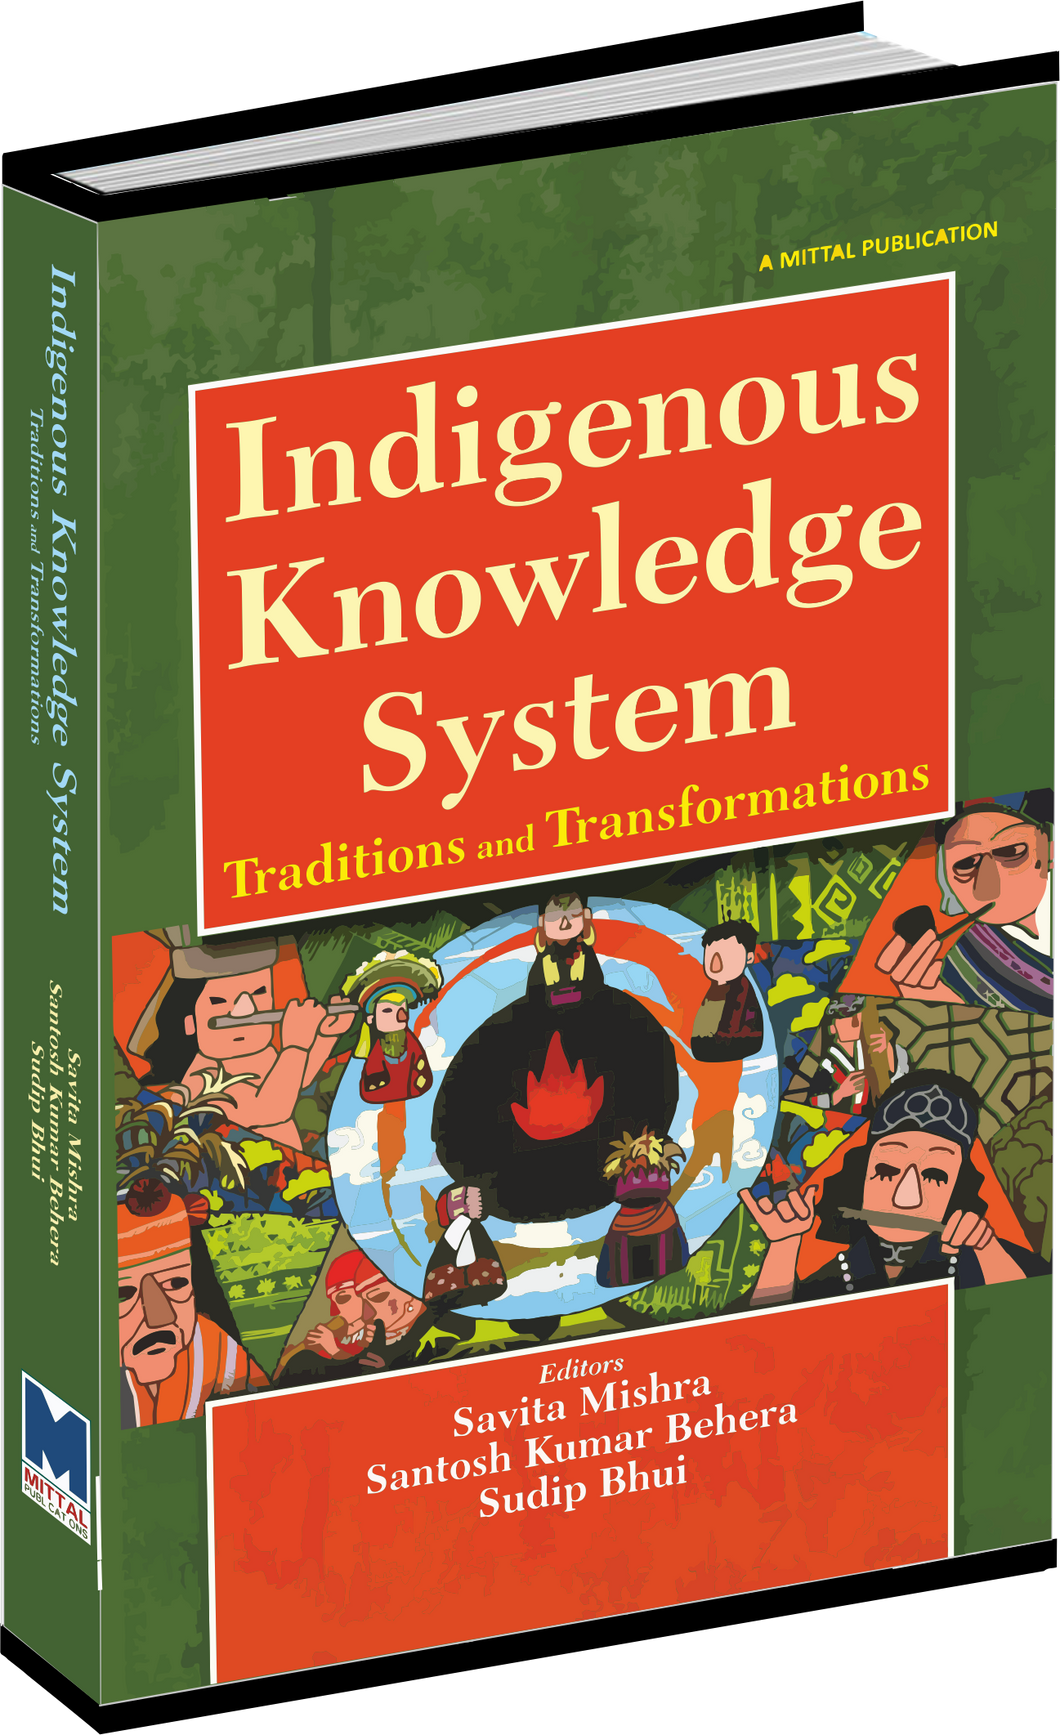 Indigenous Knowledge System: Traditions and Transformations by SAVITA MISHRA SANTOSH KUMAR BEHERA SUDIP BHUI